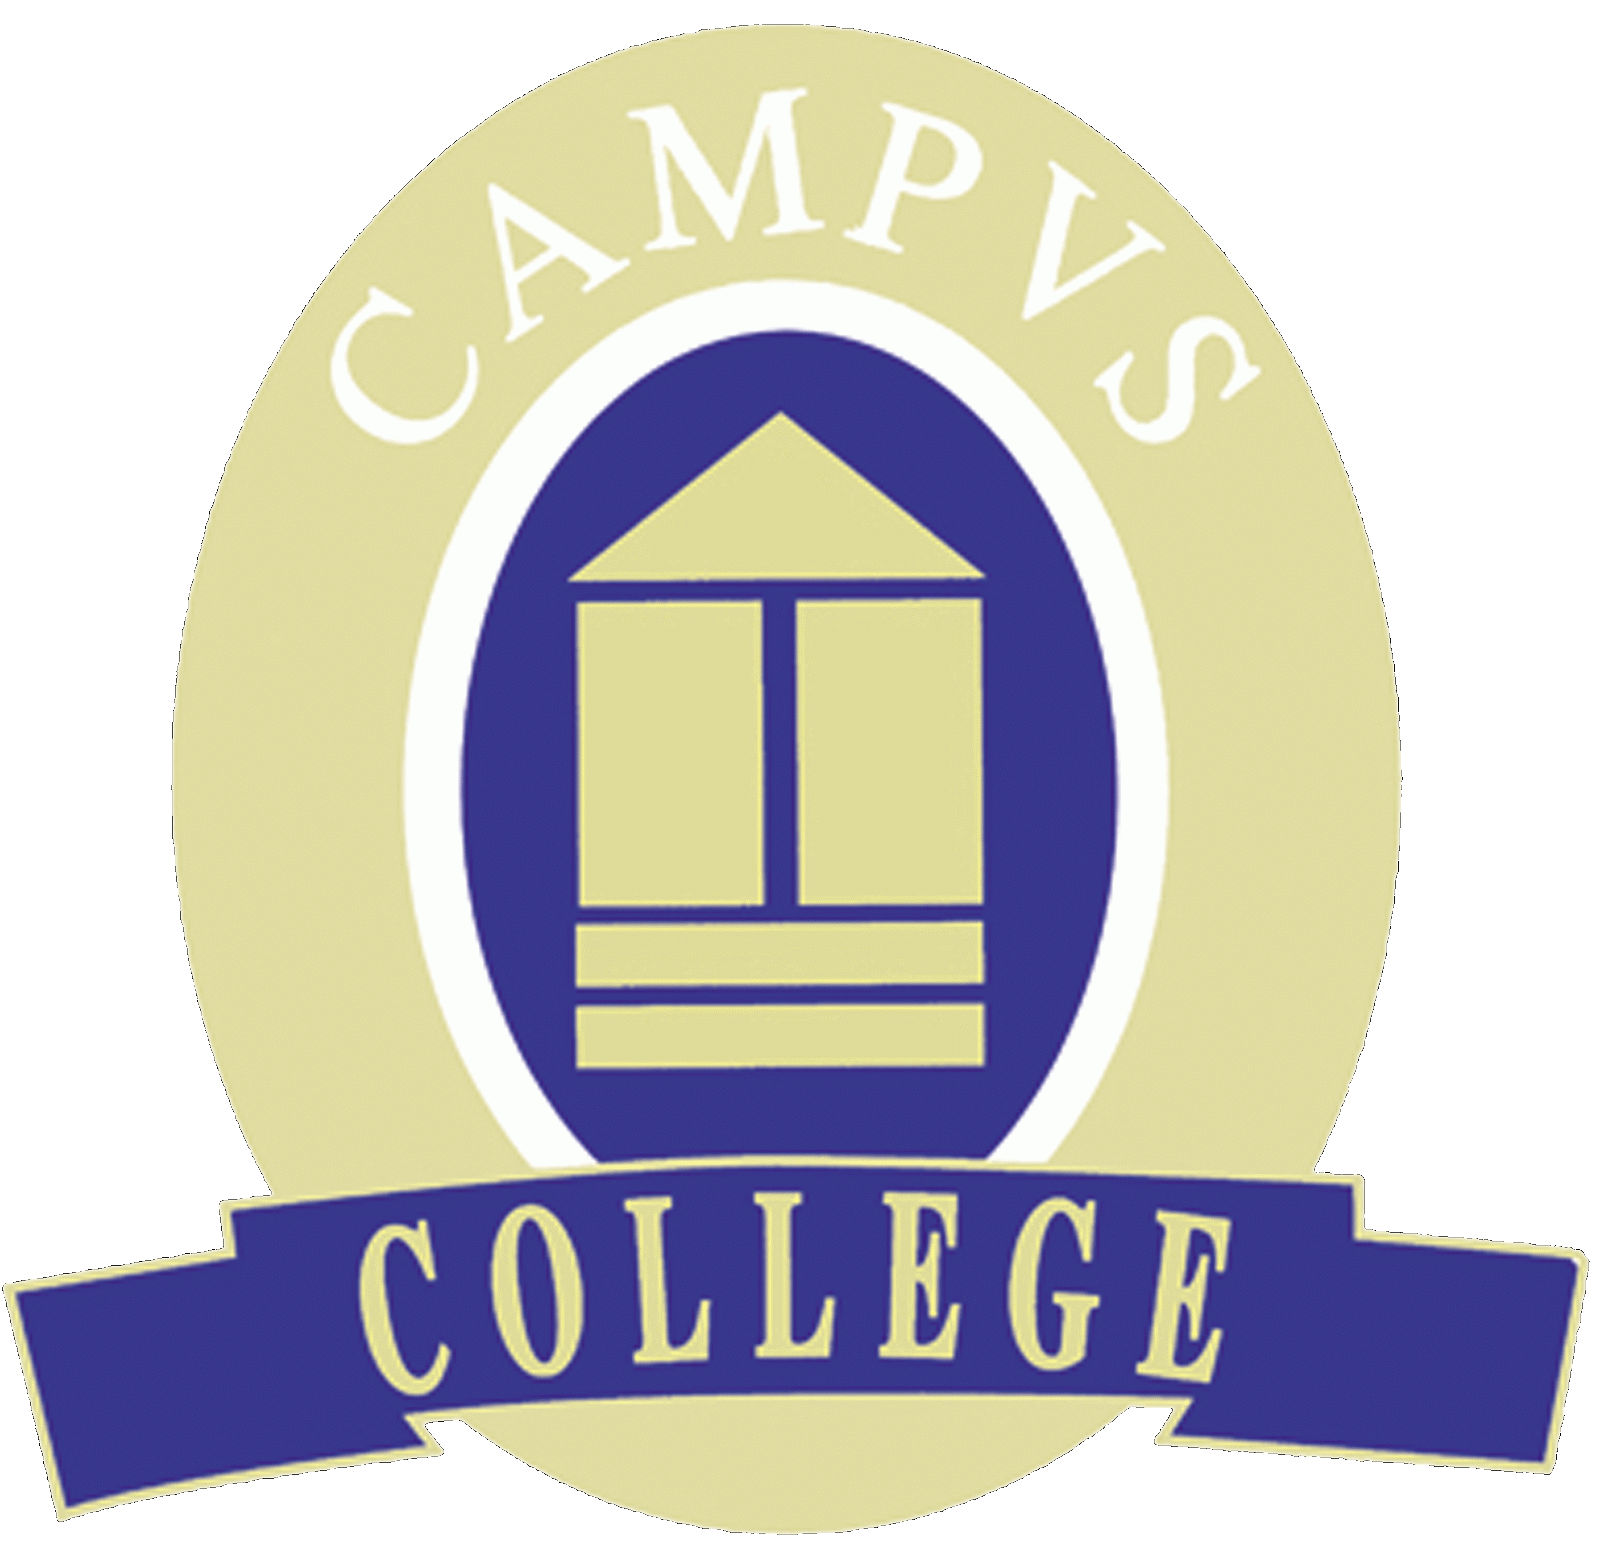 Campvs College